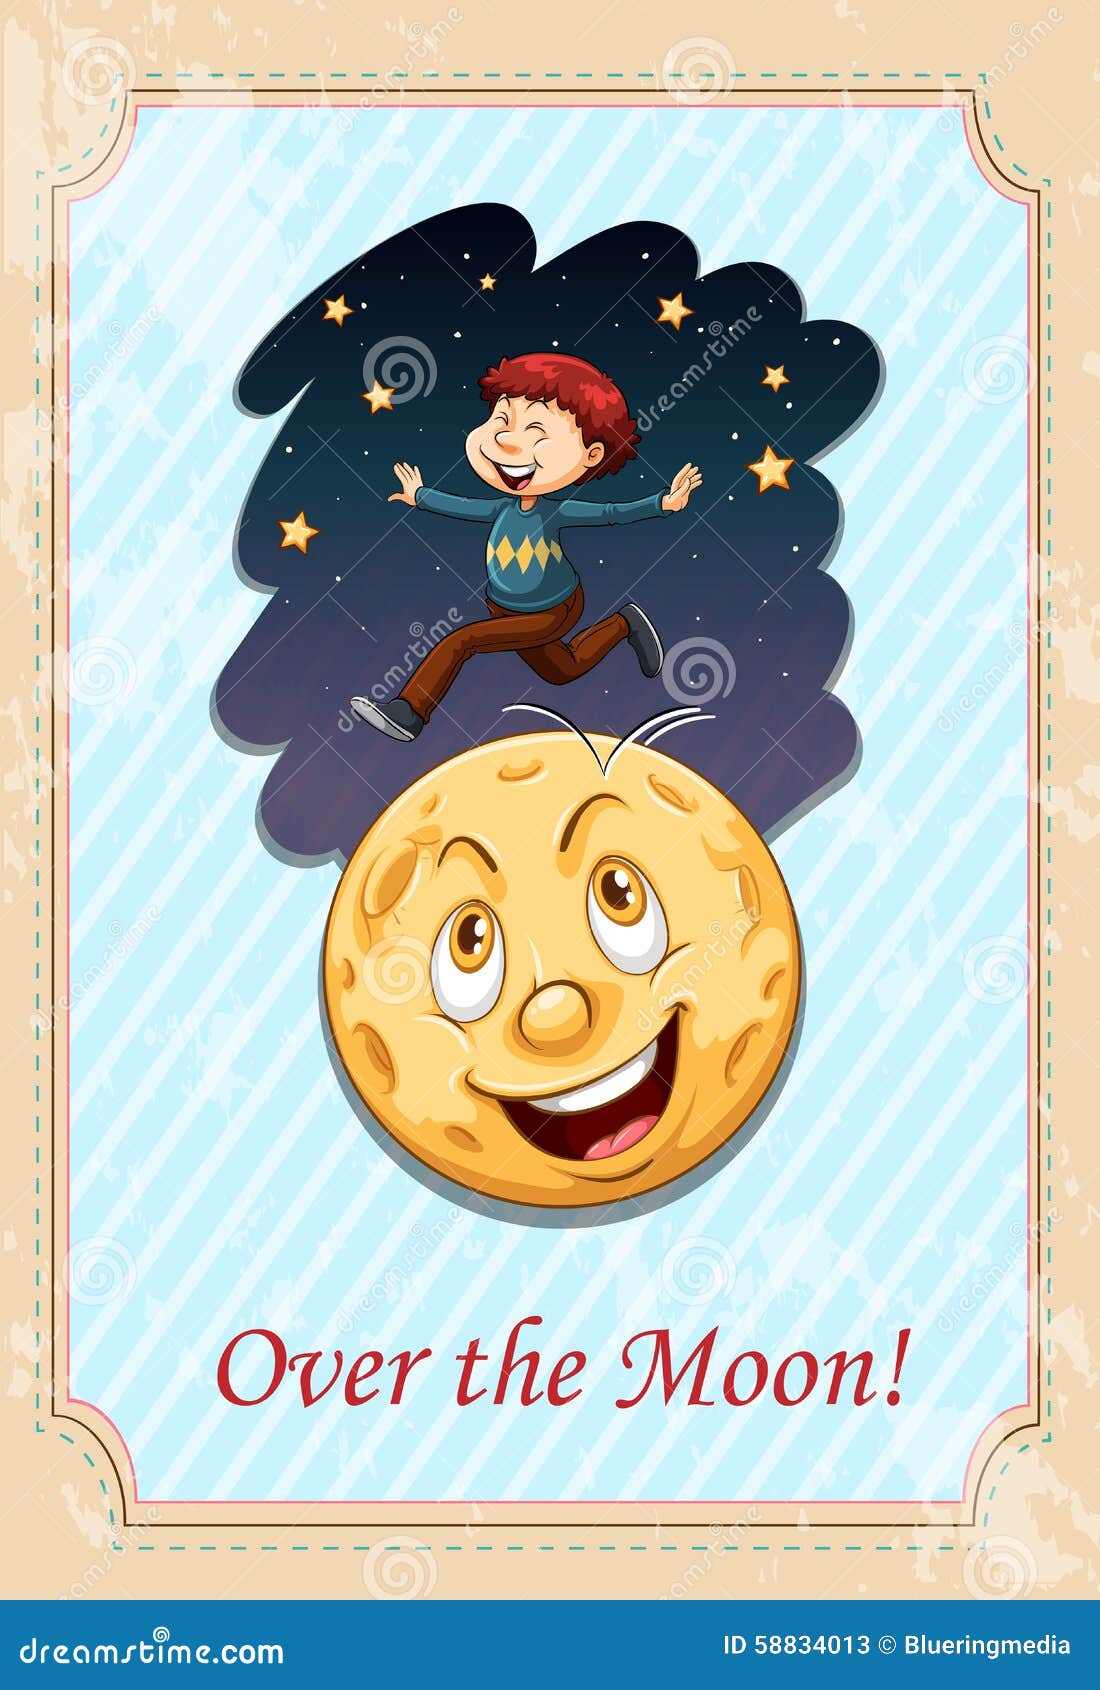 Moon idioms. Over the Moon идиома. Be over the Moon. Over the Moon idiom. Идиомы про луну.